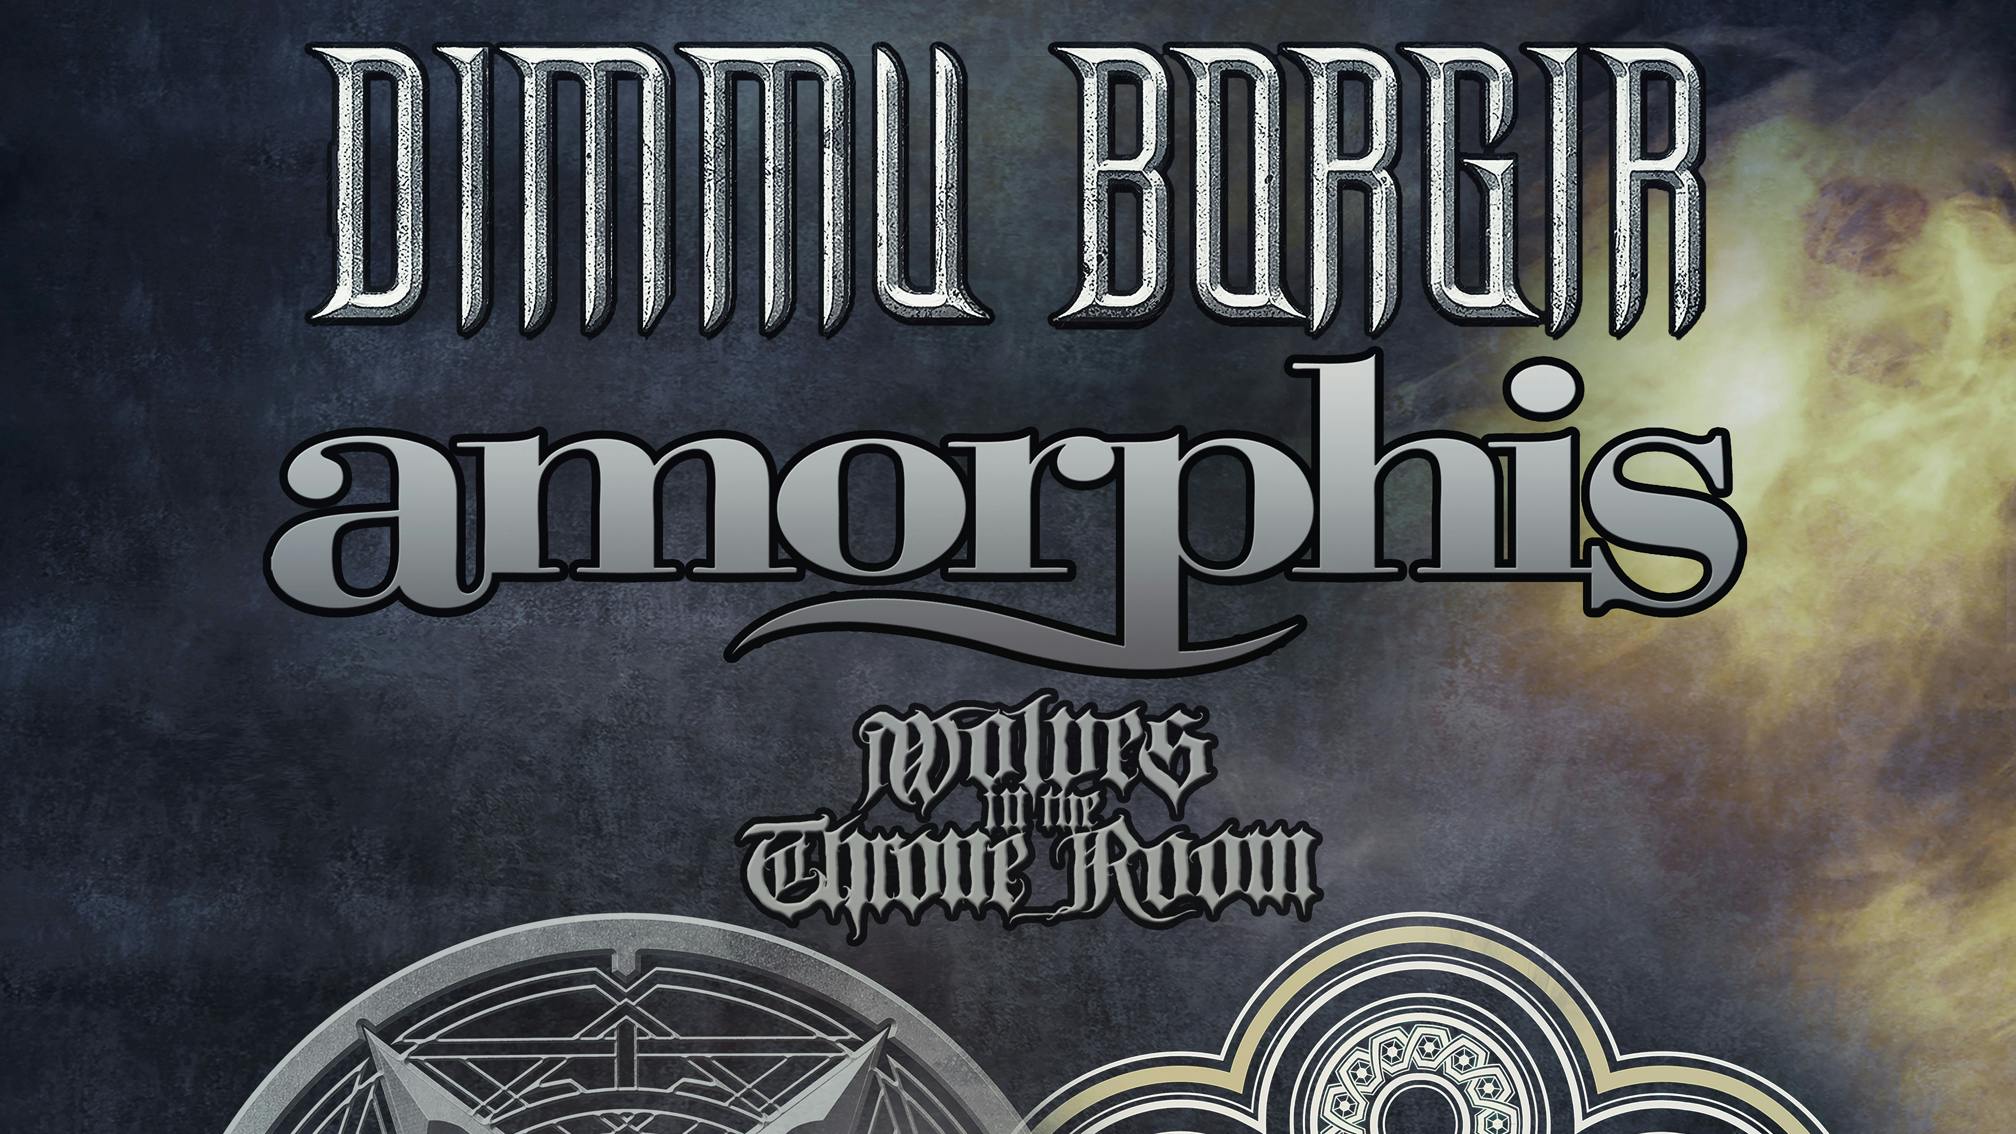 Dimmu Borgir And Amorphis Announce Co-Headline Tour – Presale Tickets Available Now